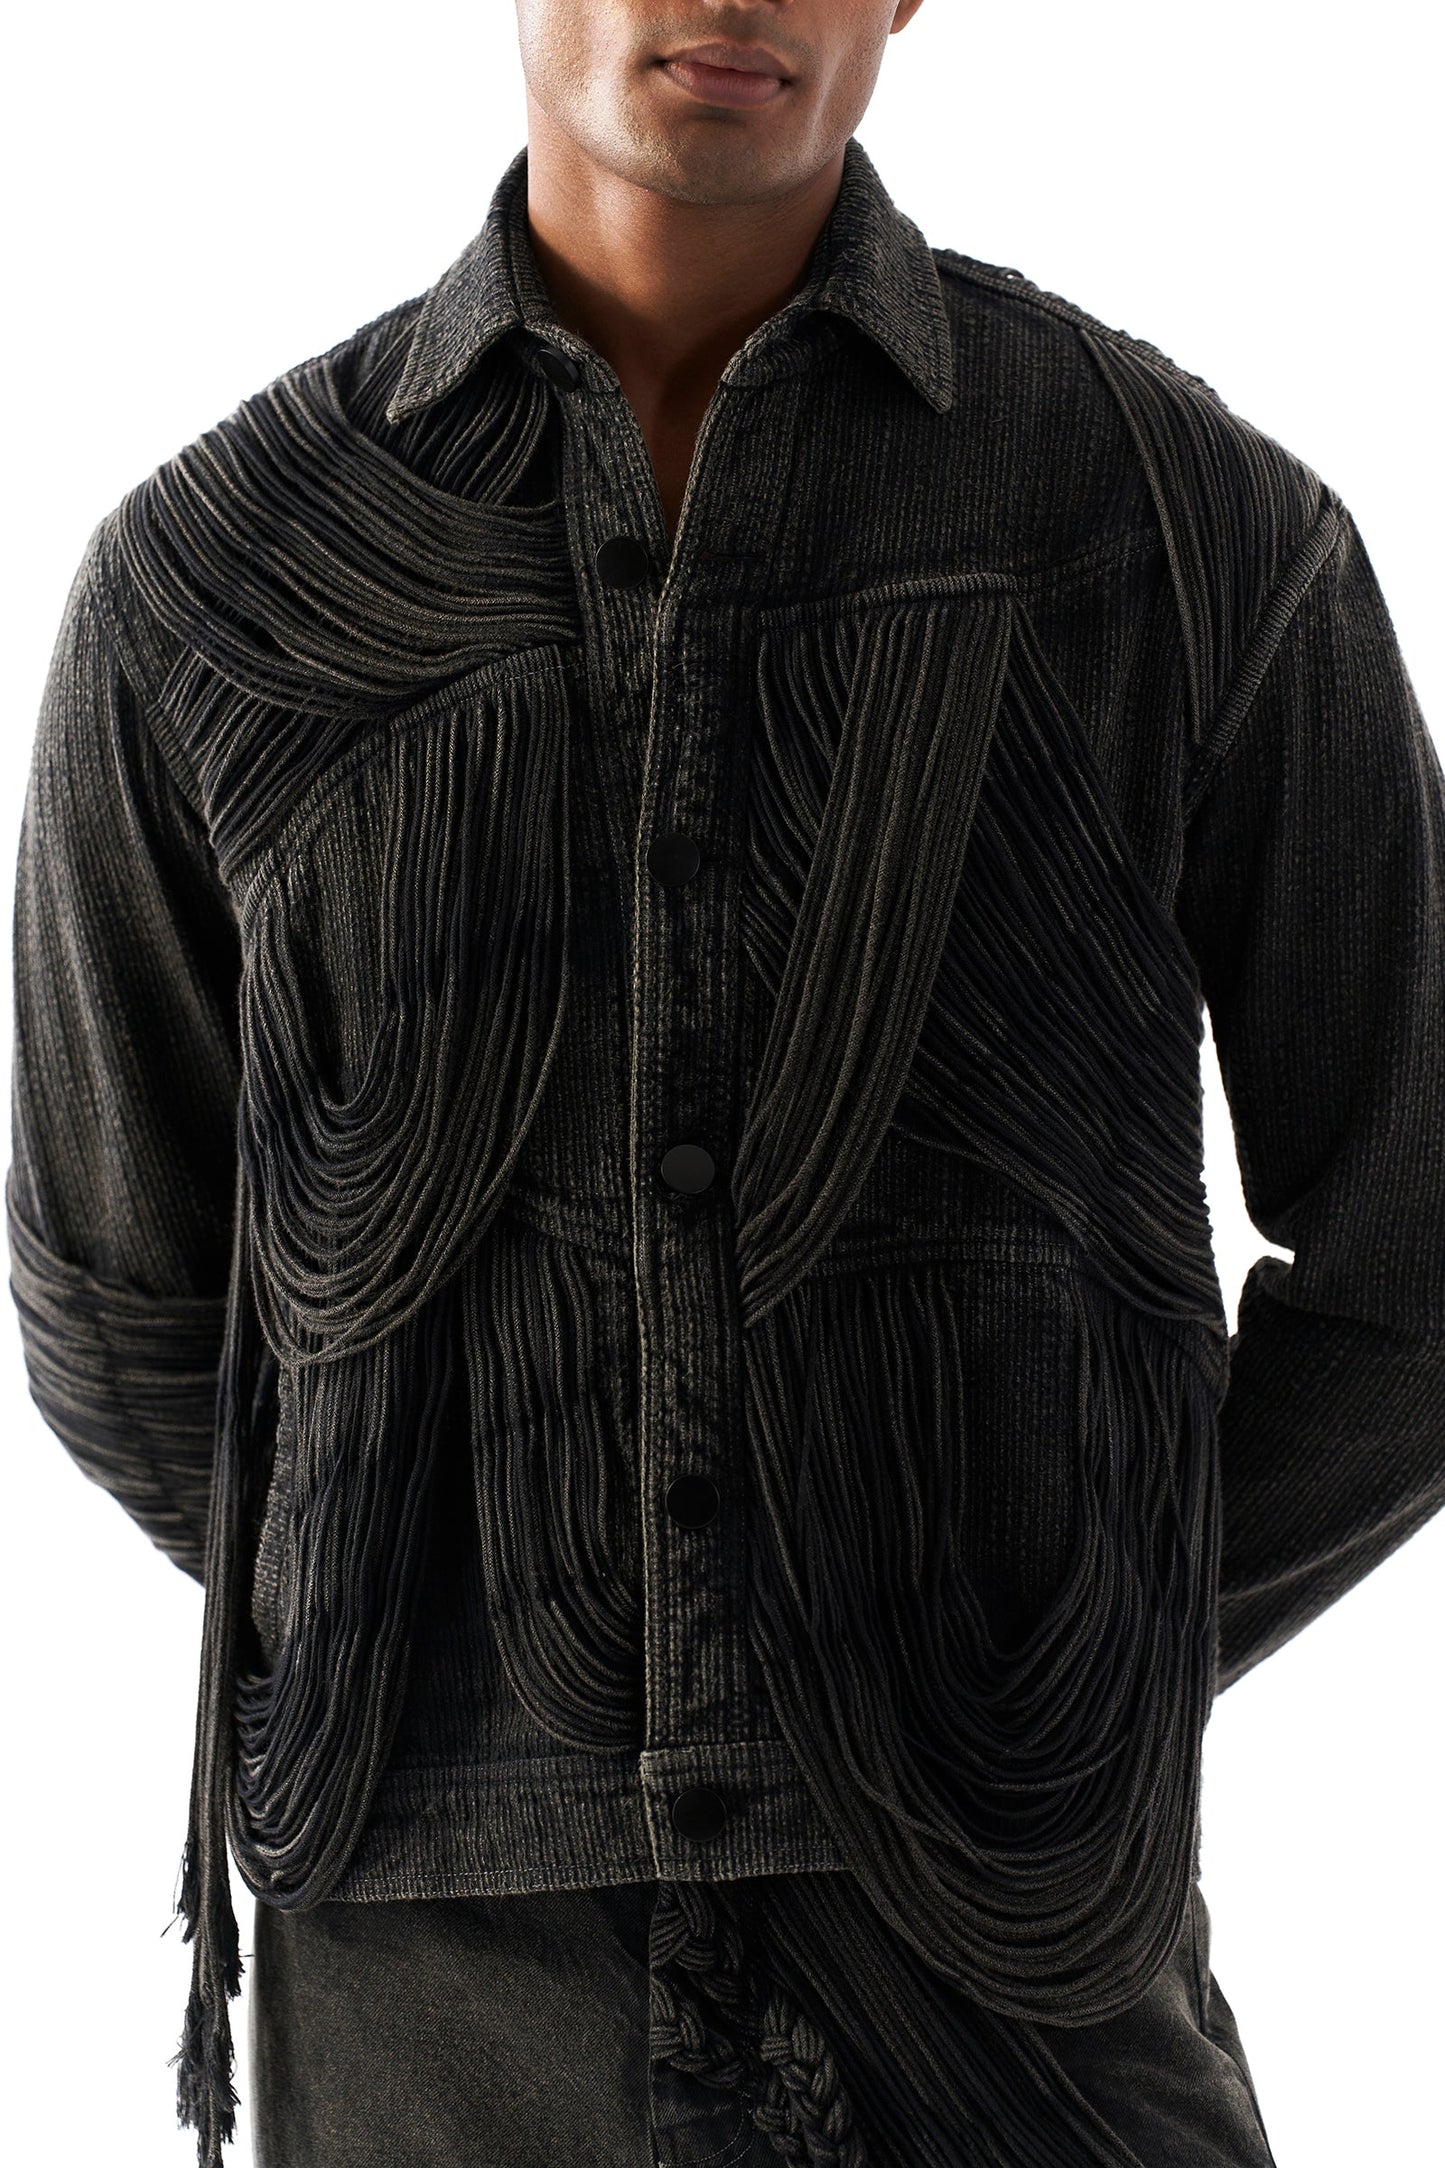 Black Banyan Jacket